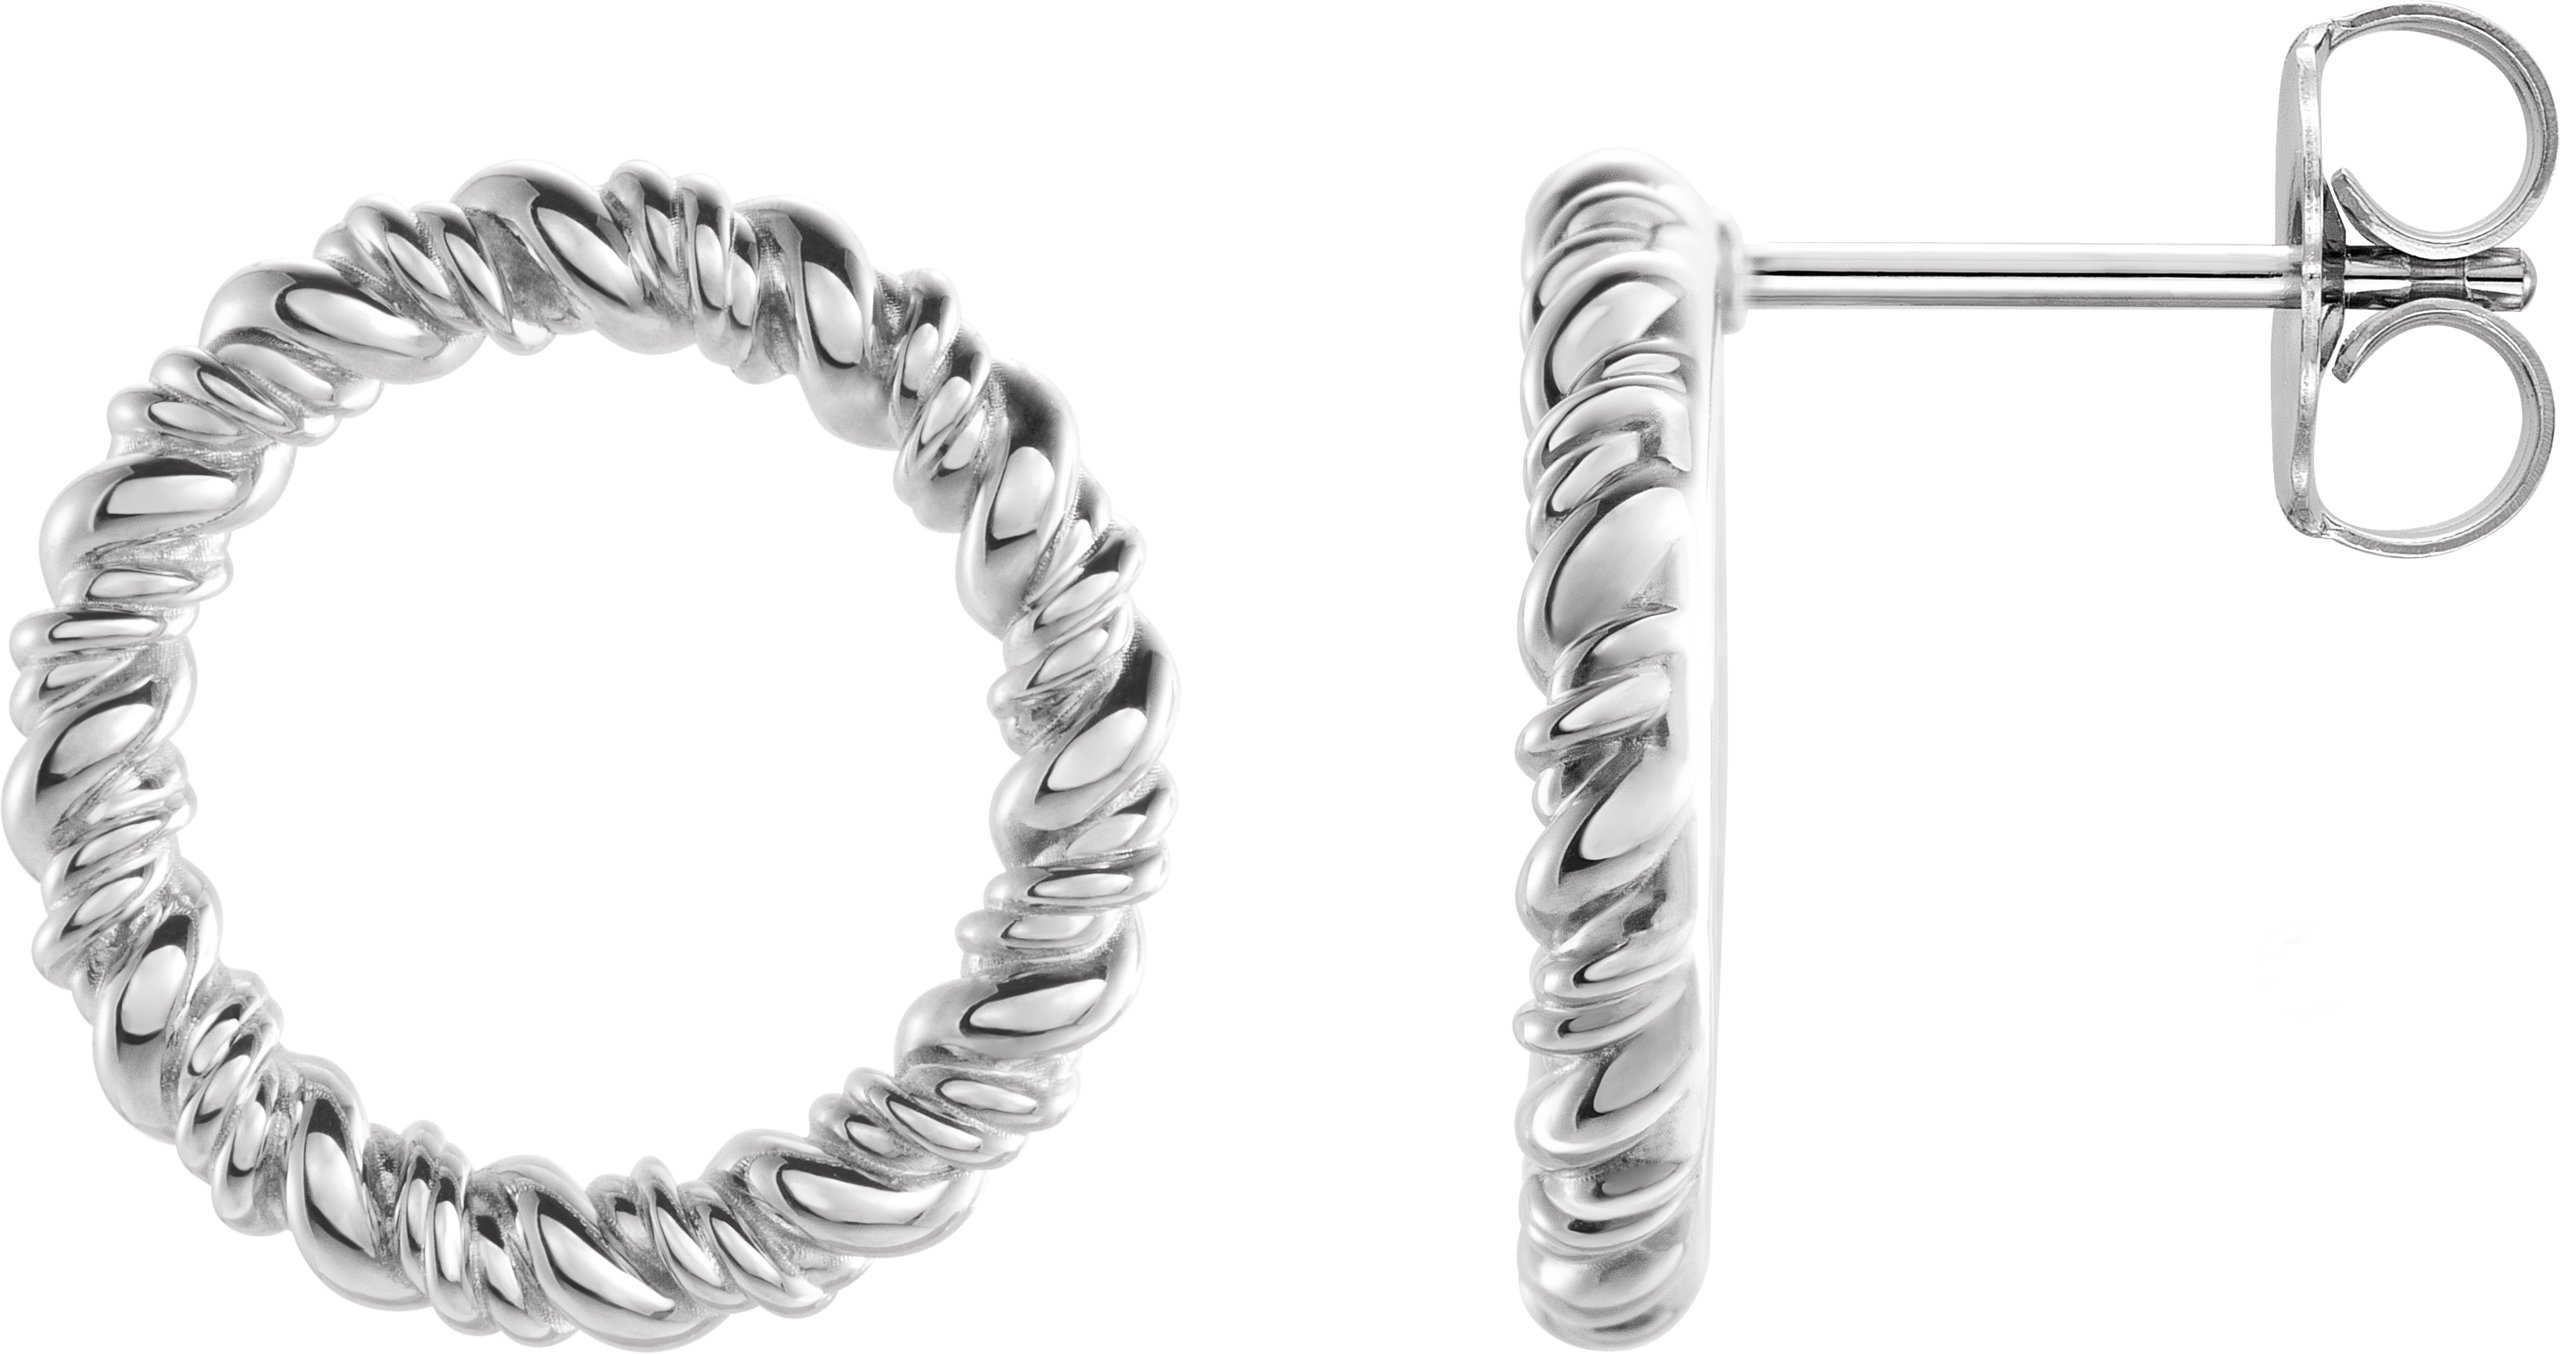 Sterling Silver 14.2 mm Circle Rope Earrings